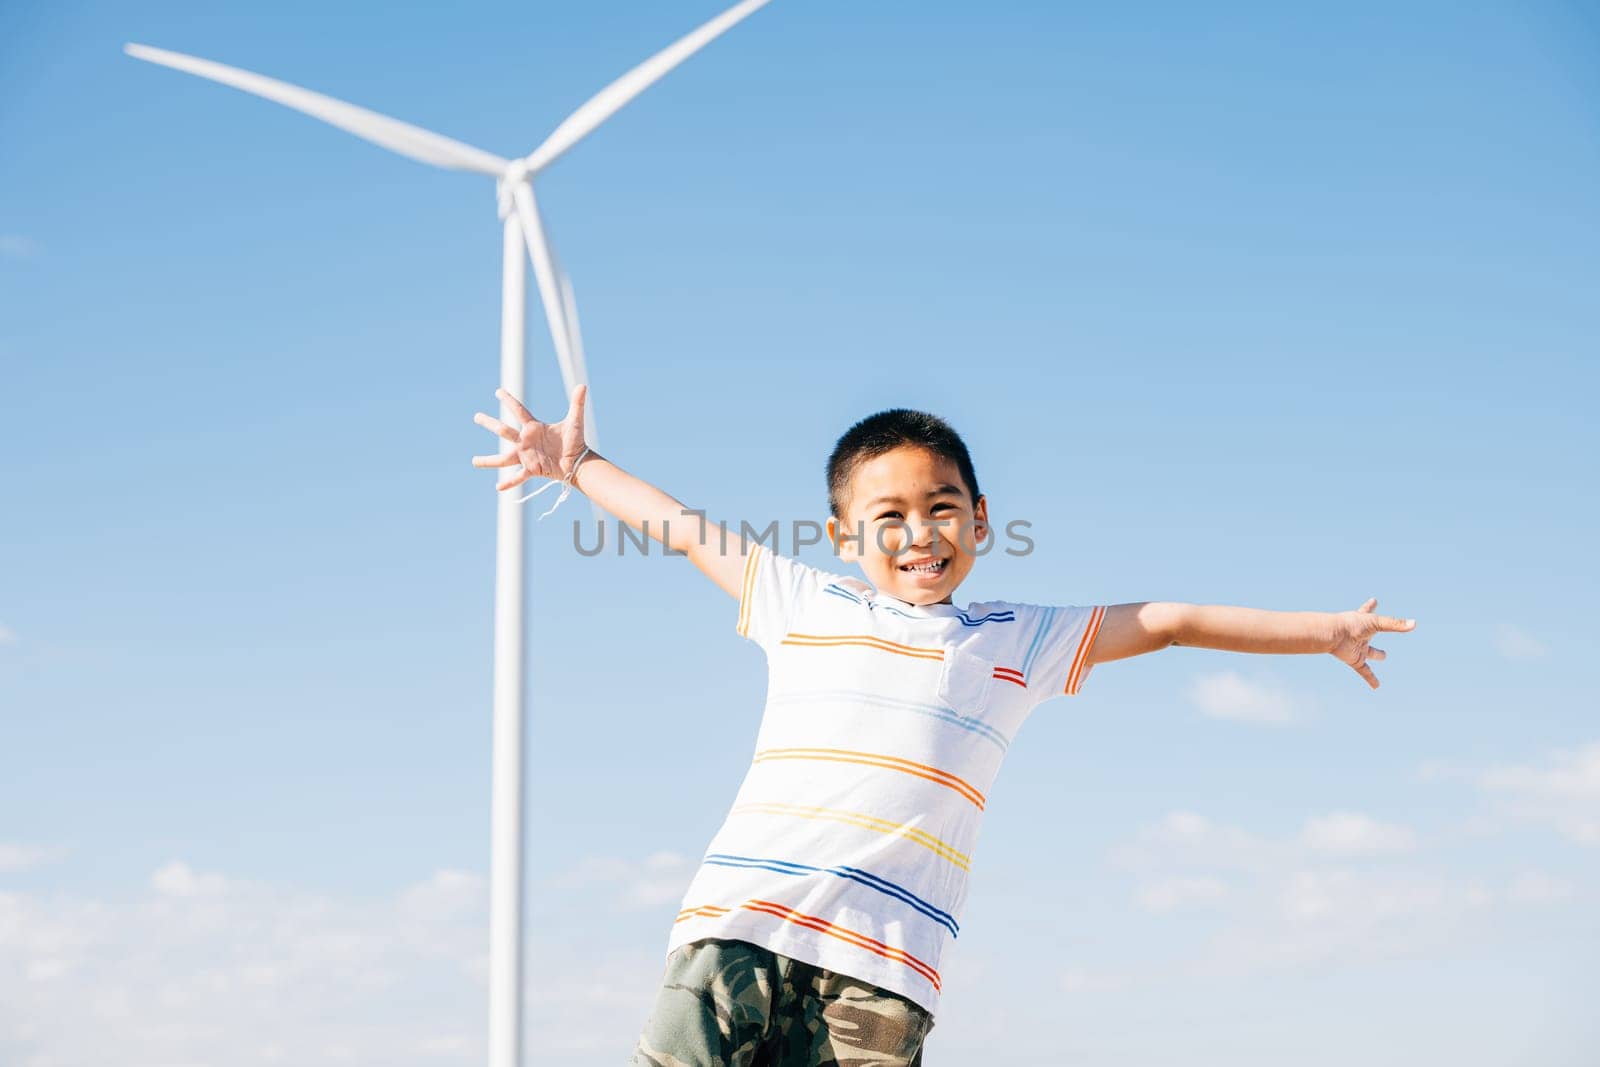 A smiling boy in the wind farm's atmosphere by Sorapop